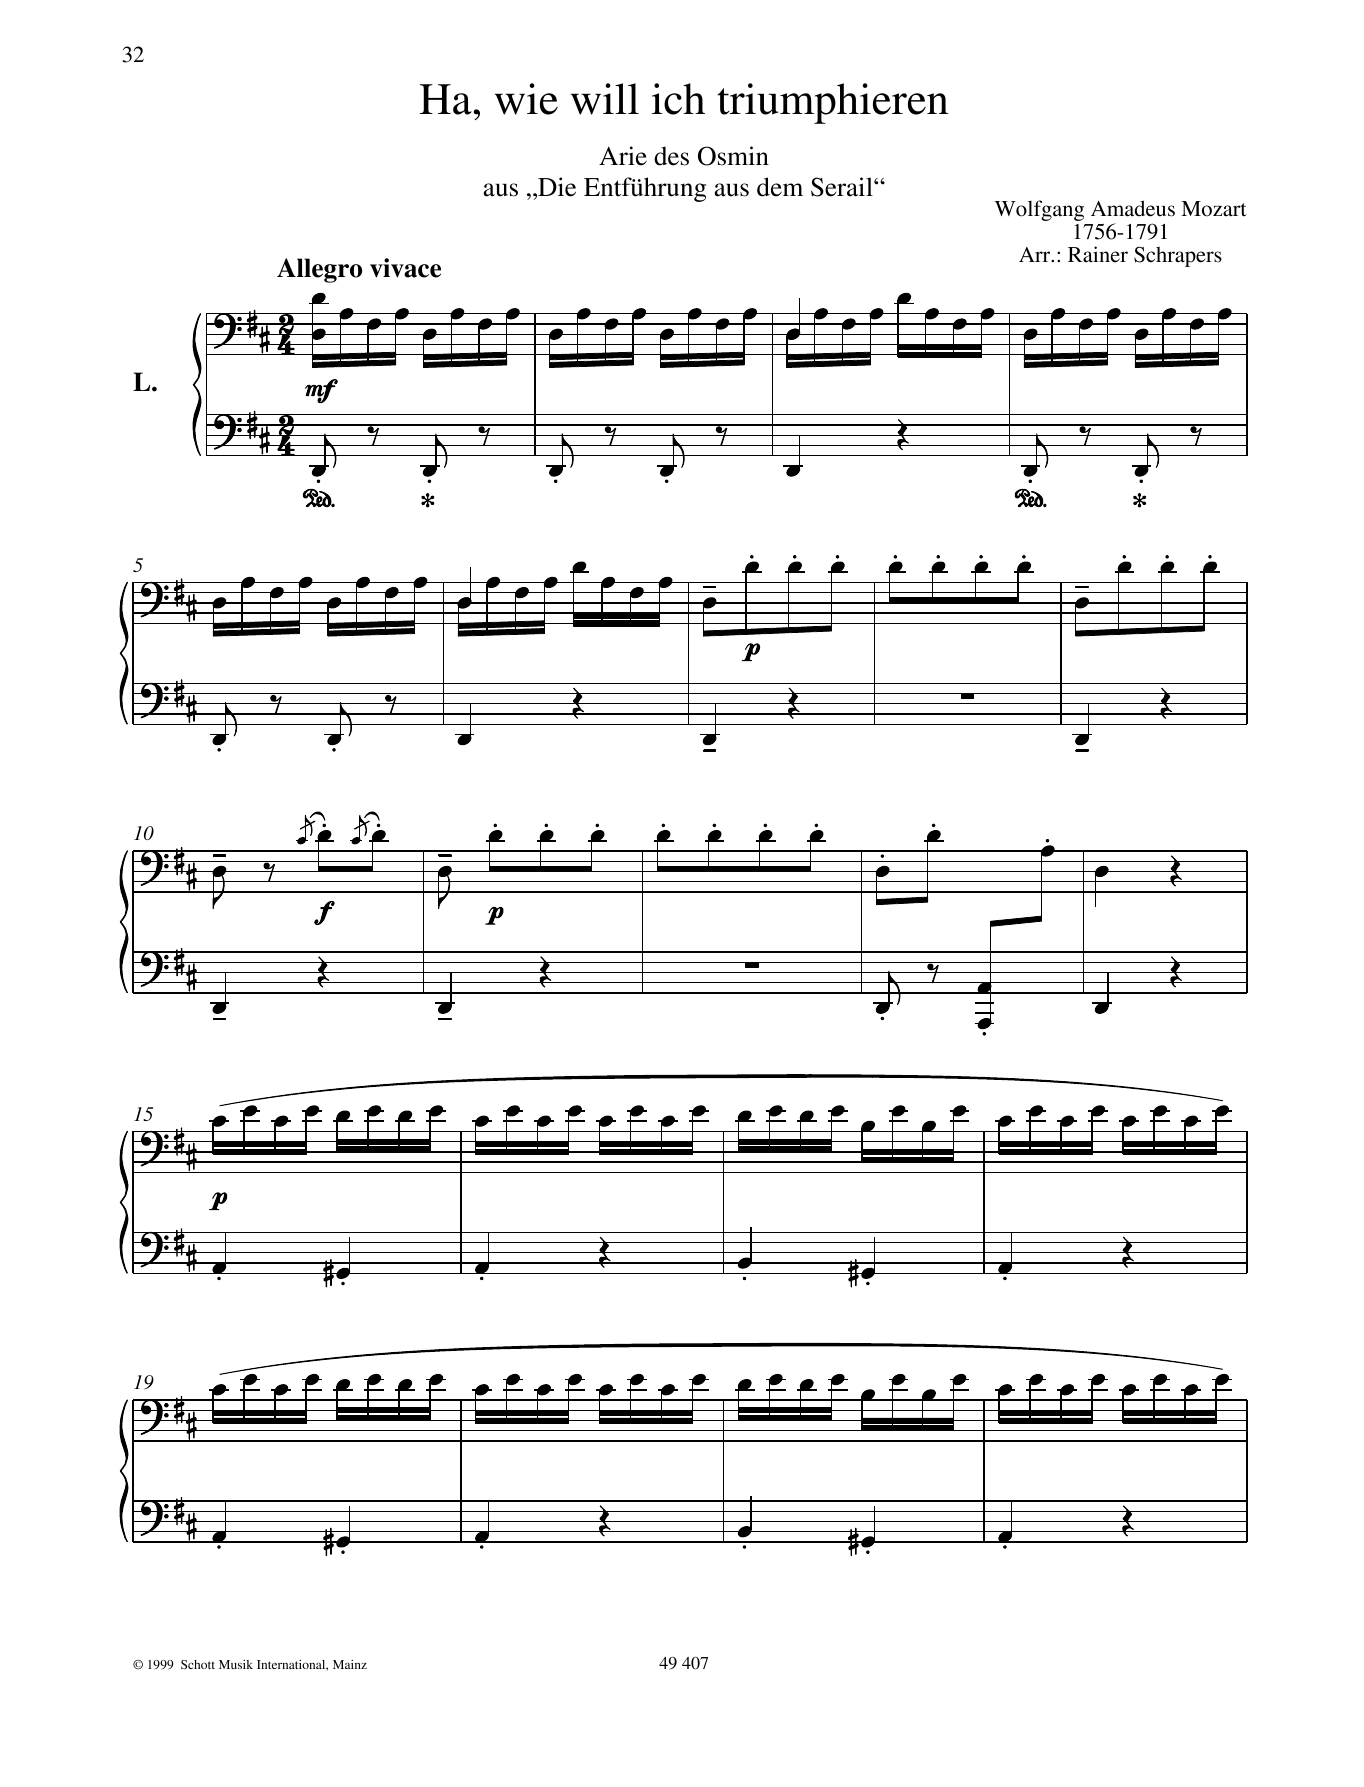 Download Wolfgang Amadeus Mozart Ha, how I shall triumph Sheet Music